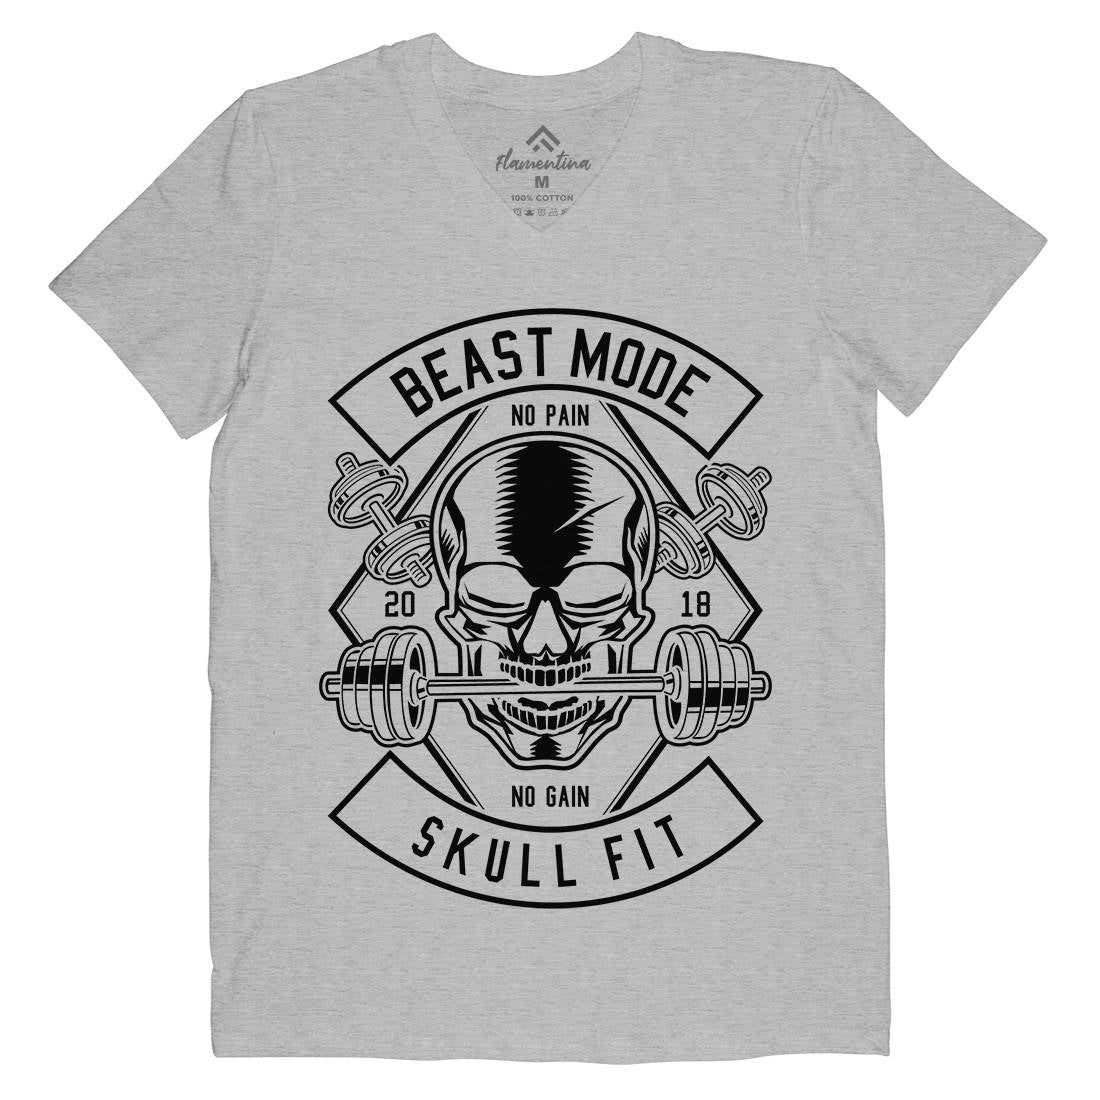 Skull Fit Mens Organic V-Neck T-Shirt Gym B628